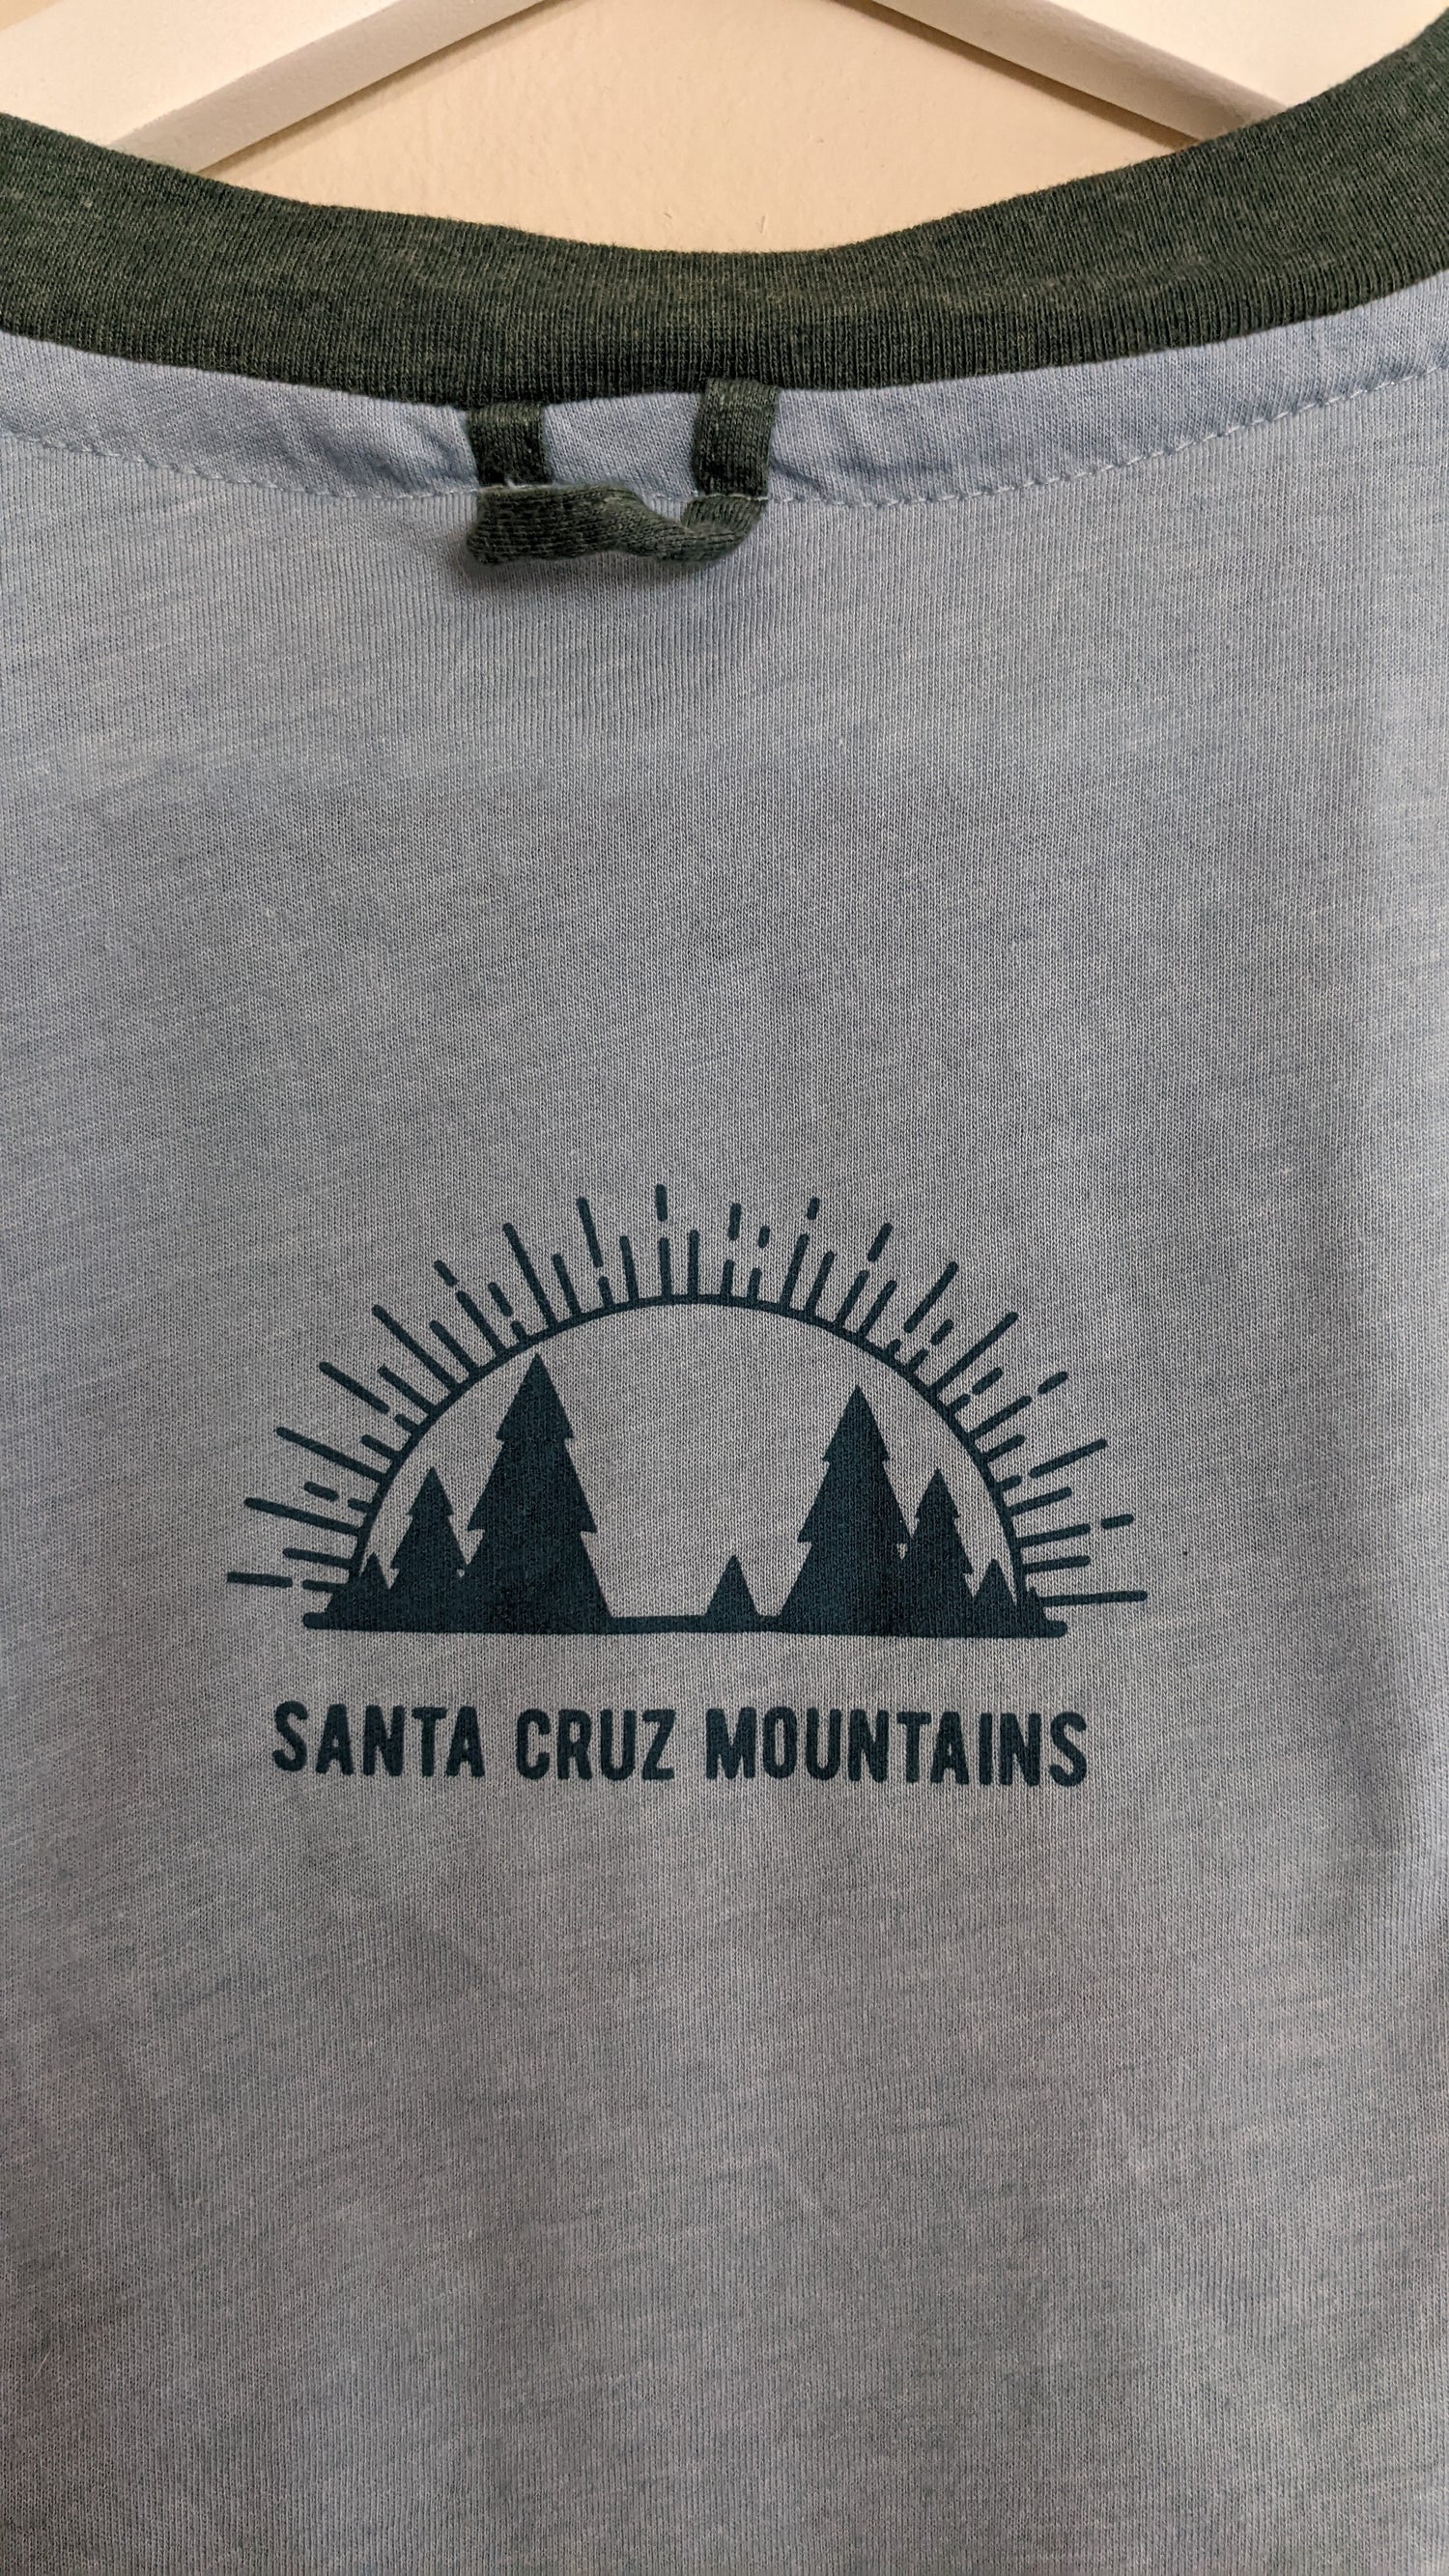 Close up of Santa Cruz Mountains Present logo mark on back of blue and green shirt